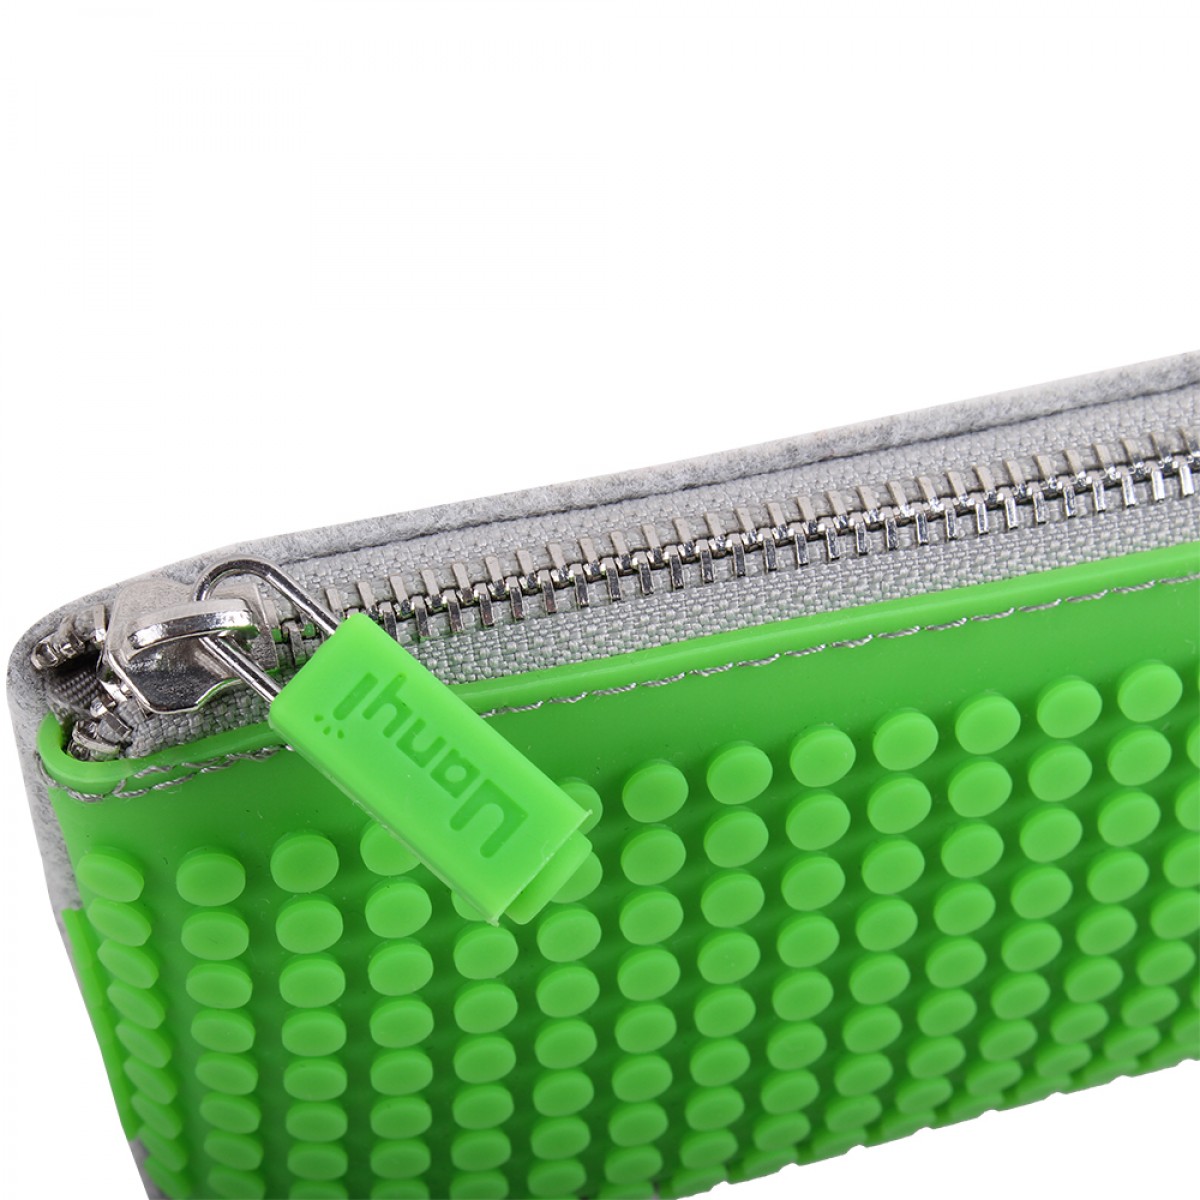 UPixel Pencil Case - Apple Green